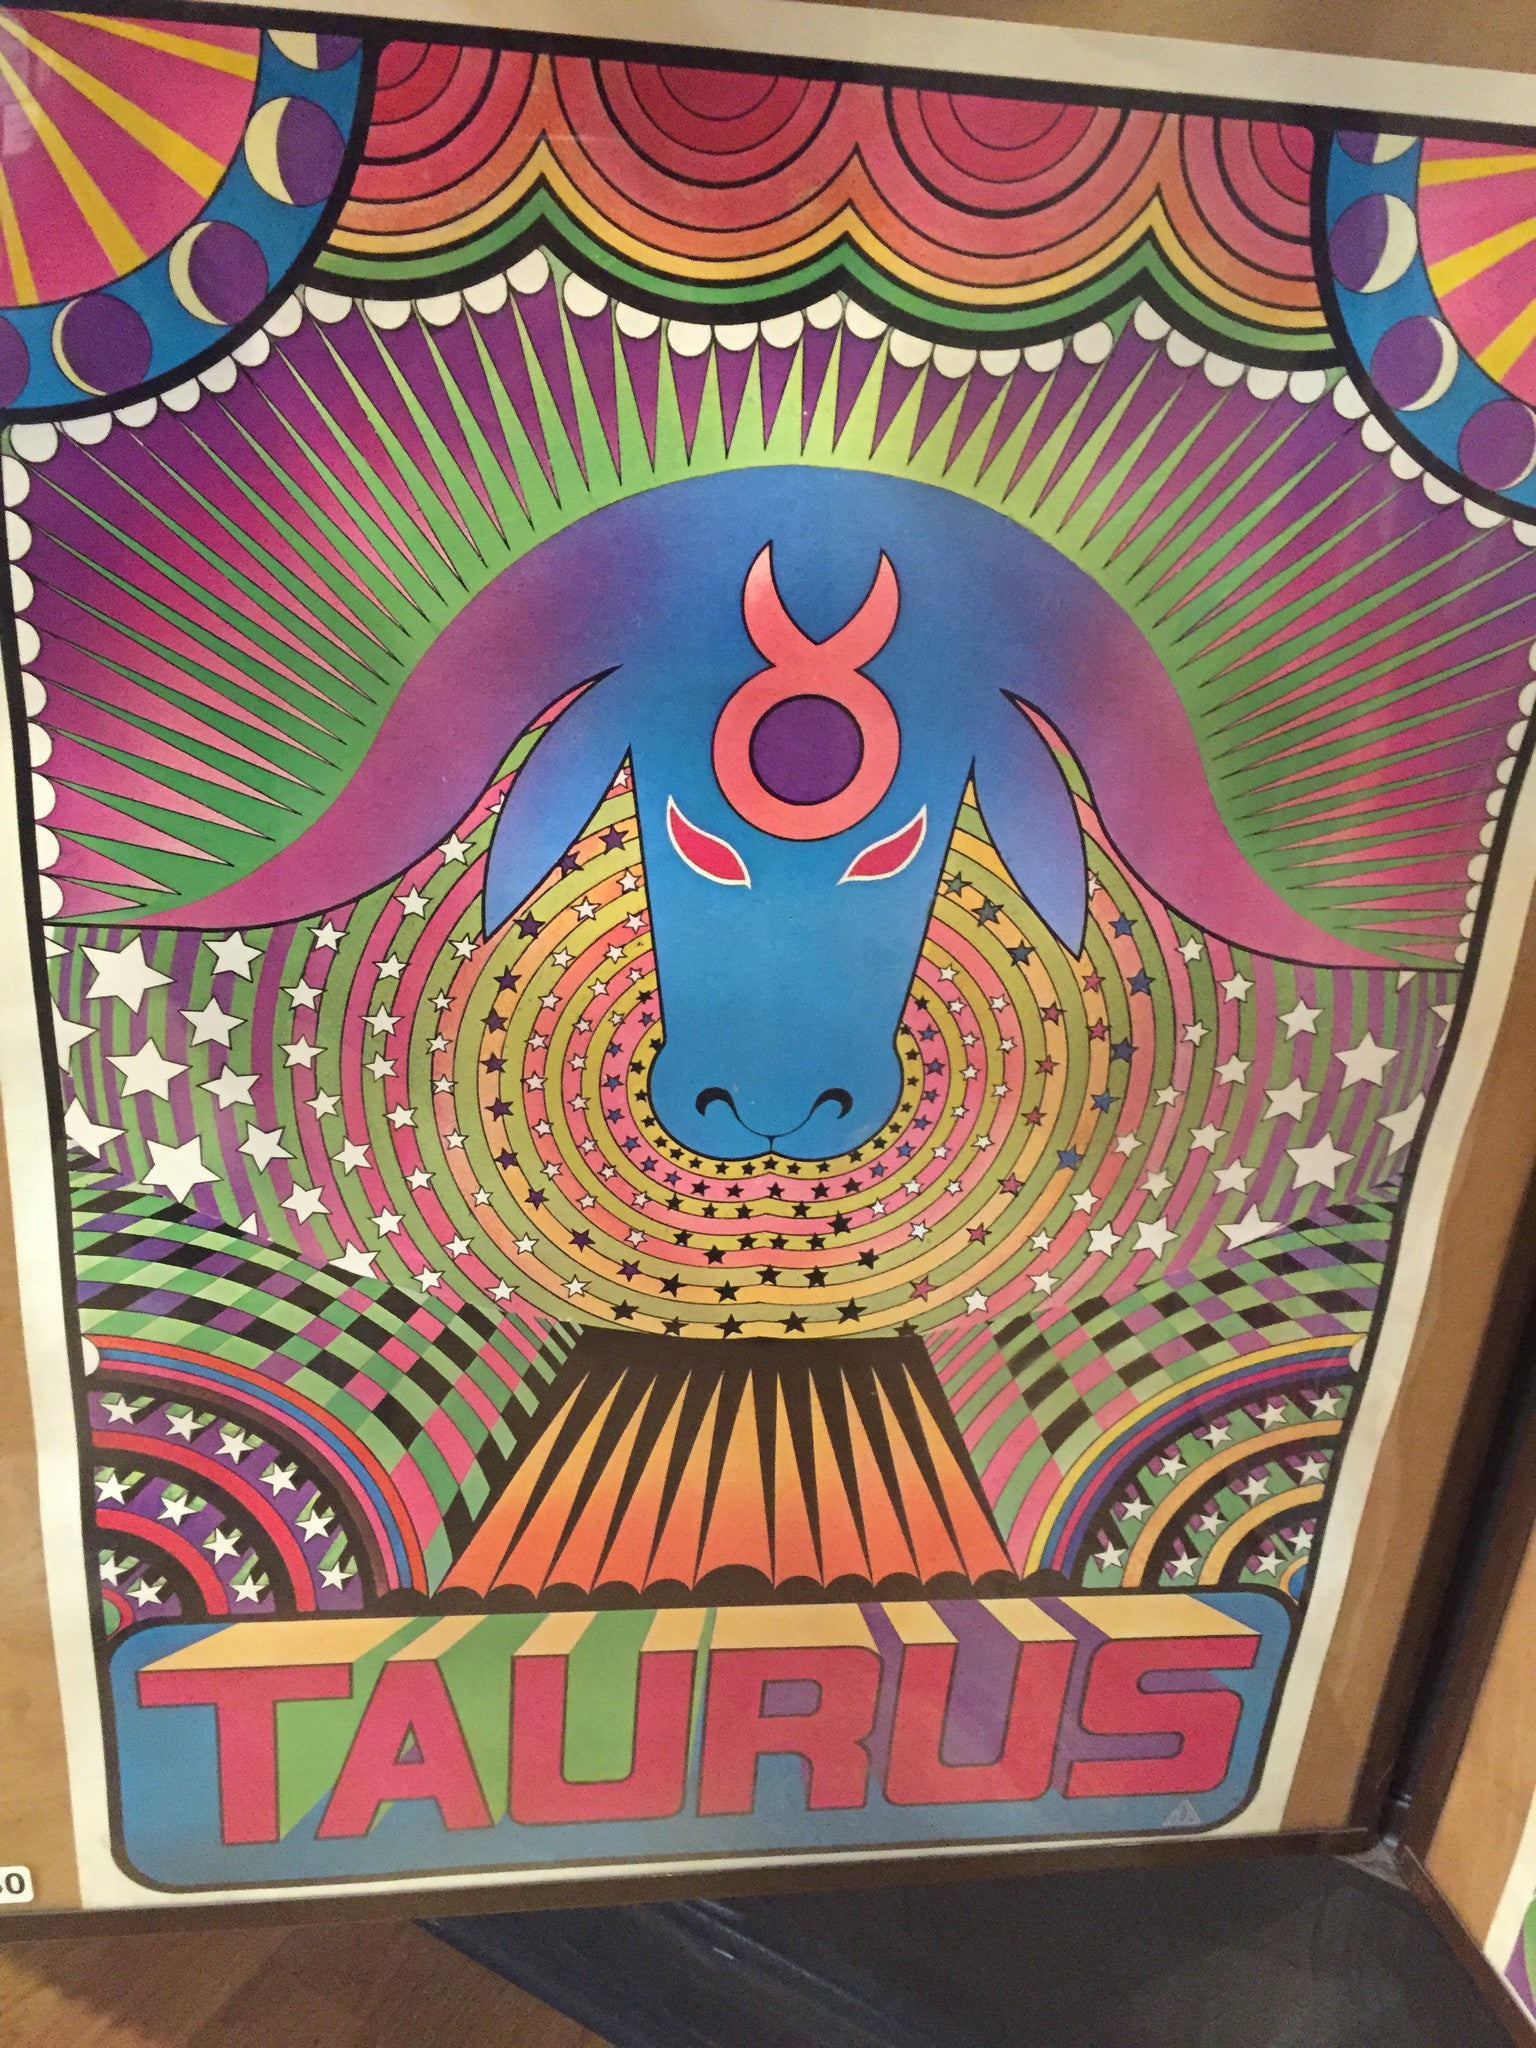 Taurus - Zodiac Sign - 1970 Poster p0530